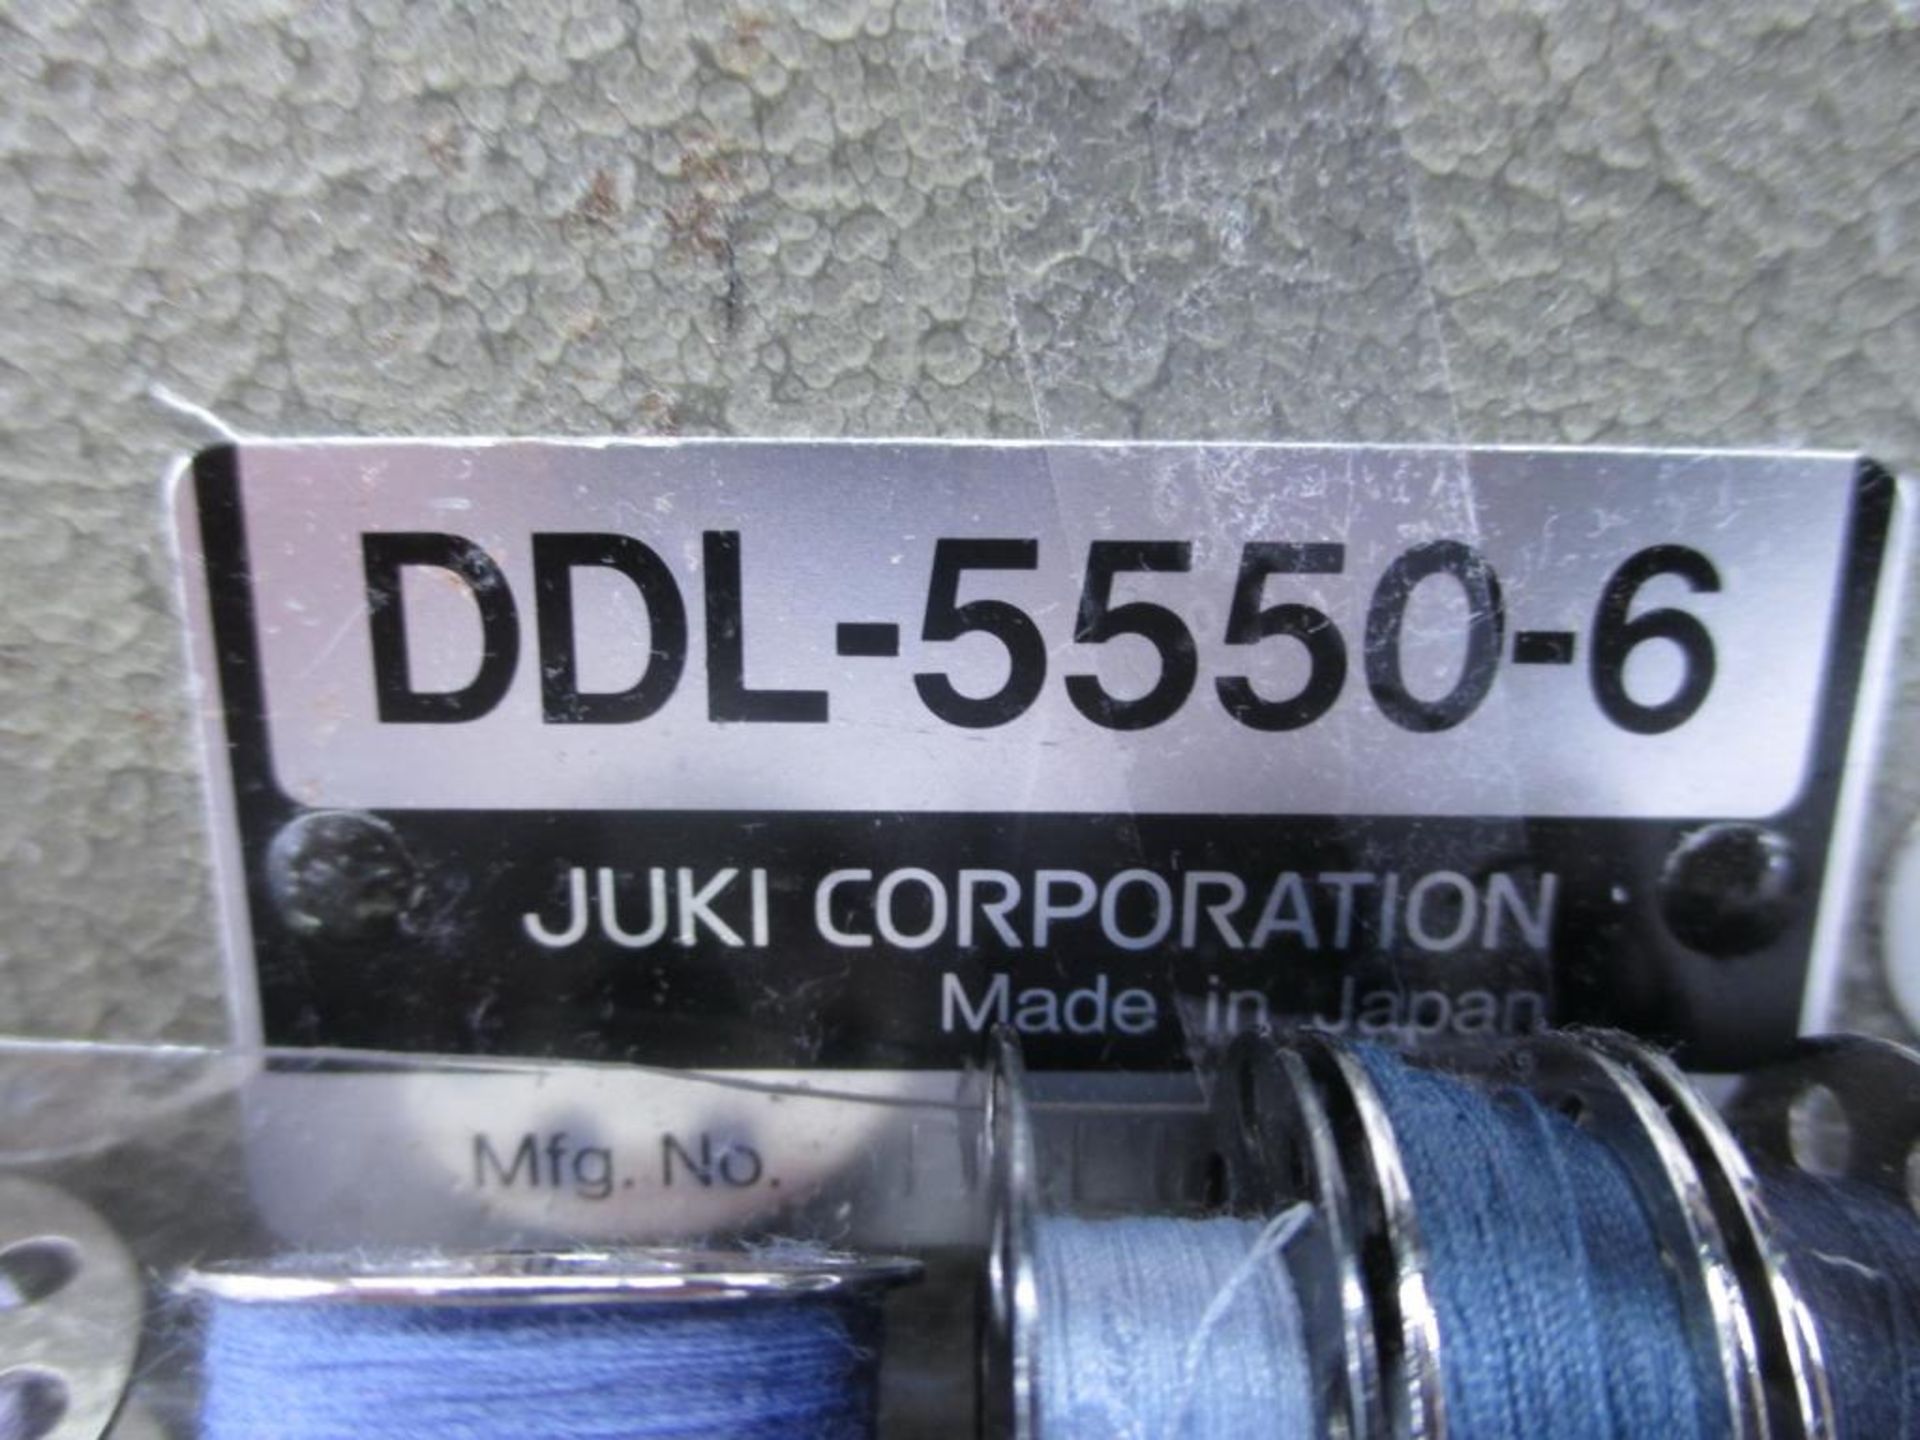 Lockstitch Reverse Industrial Sewing Machine. Juki DDL-5550-6 1-needle Lock Stitch Reverse - Image 3 of 5